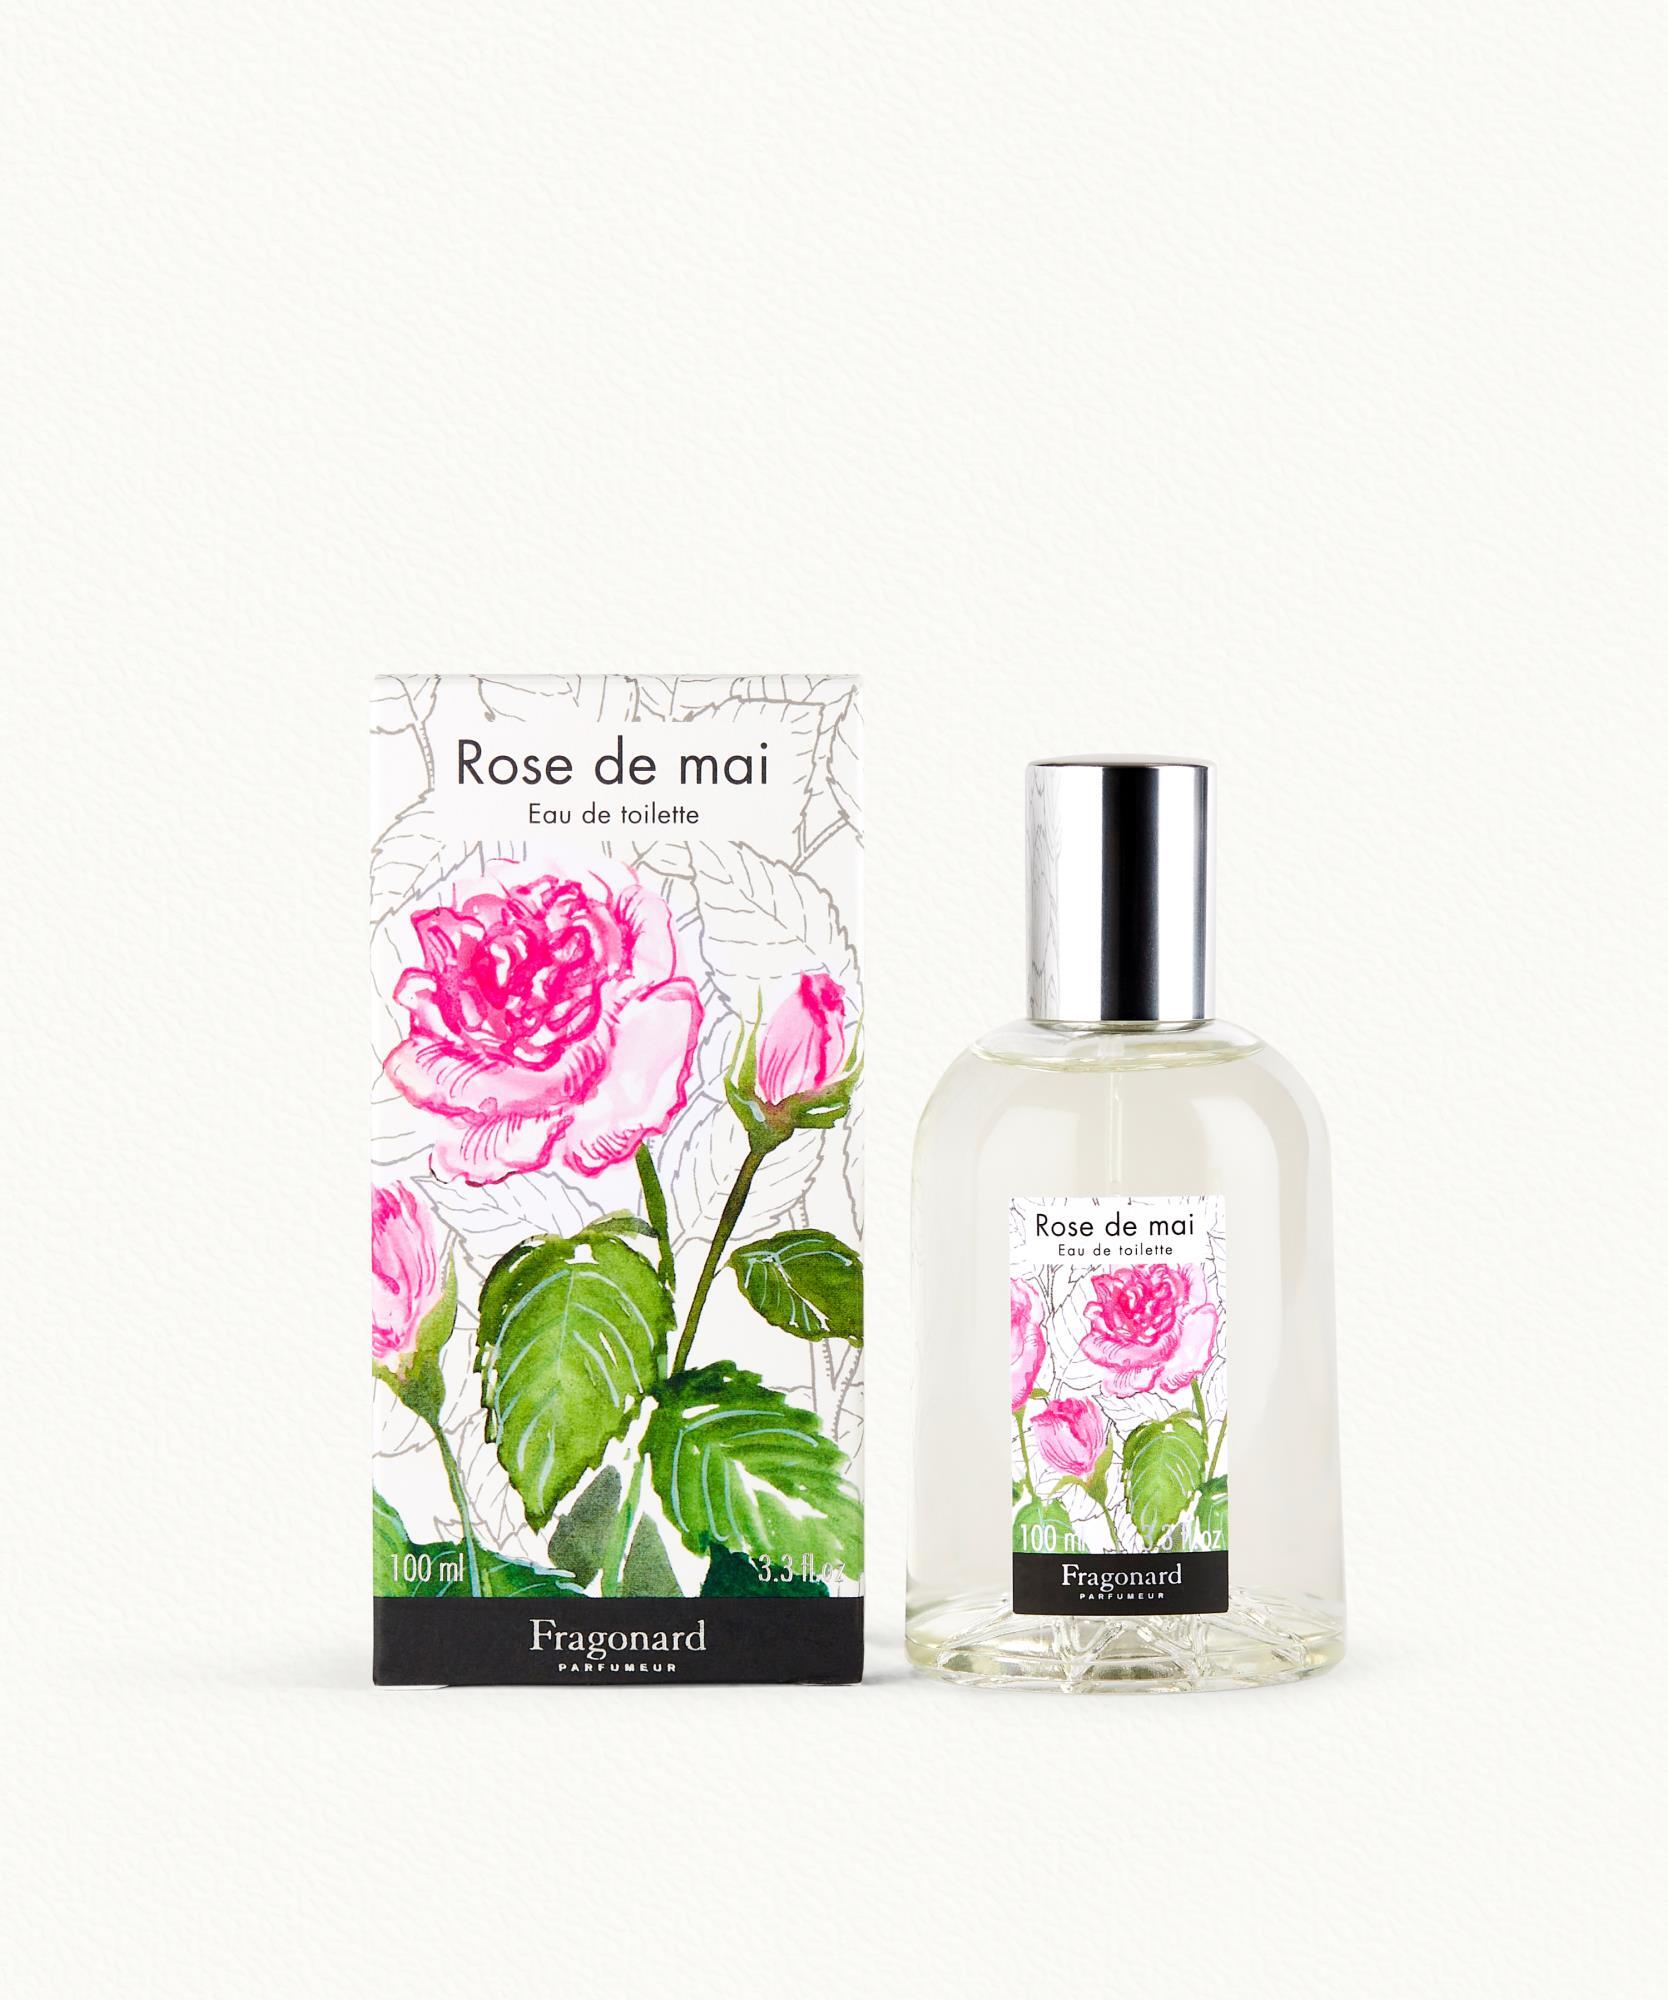 Top 10 MAY ROSE / ROSE DE MAI Fragrances